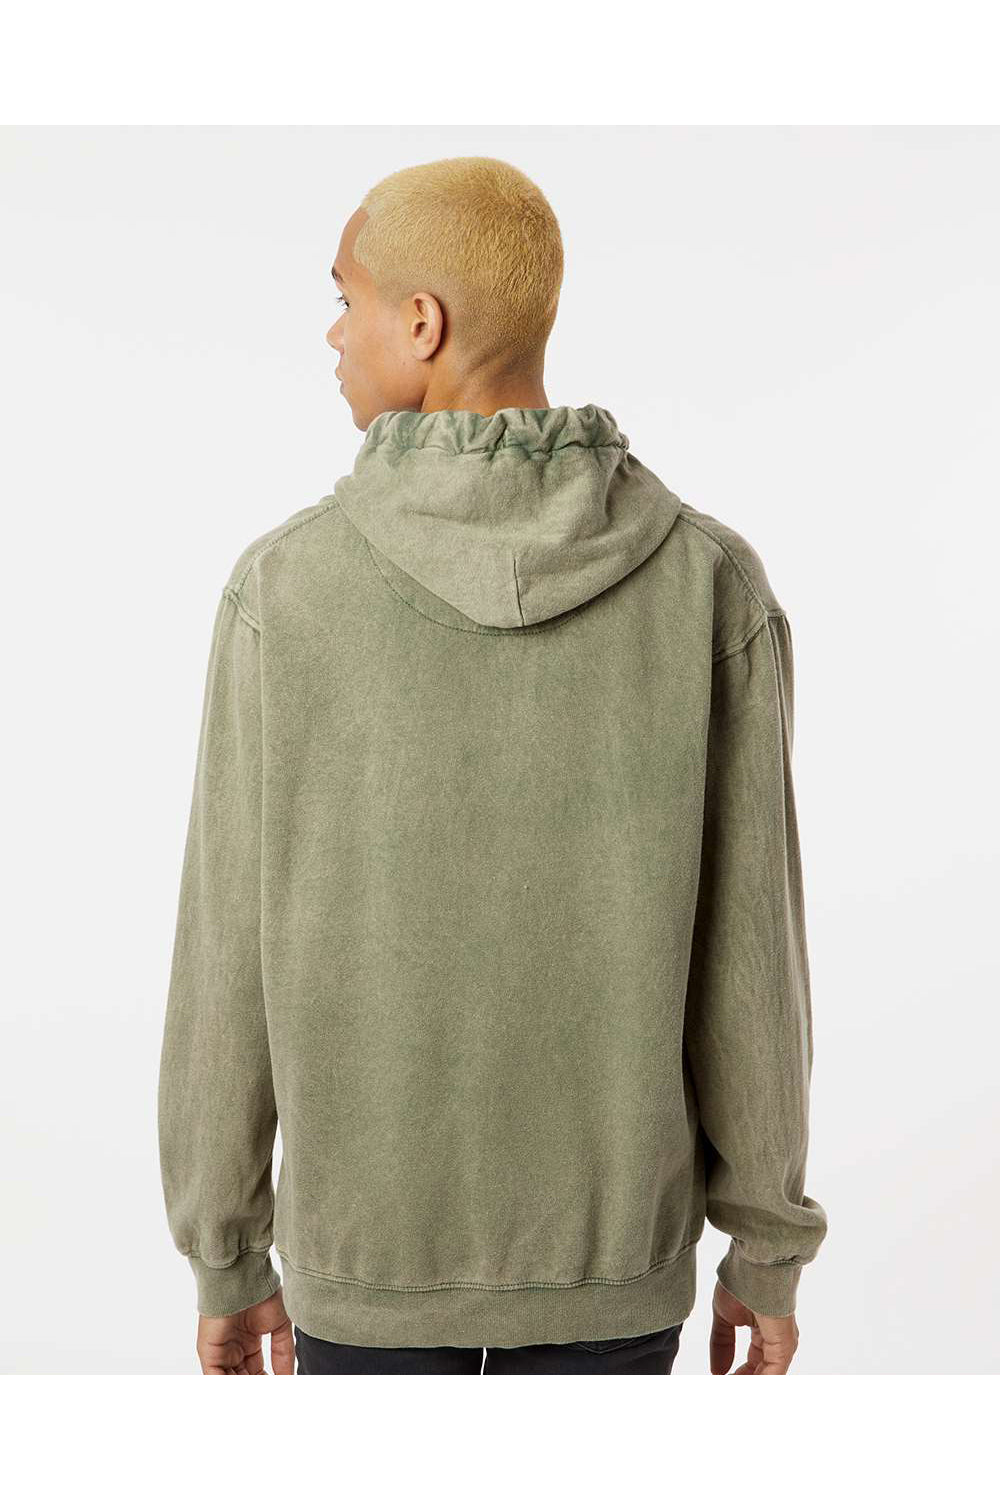 Dyenomite 854MW Mens Premium Fleece Mineral Wash Hooded Sweatshirt Hoodie Kale Green Model Back